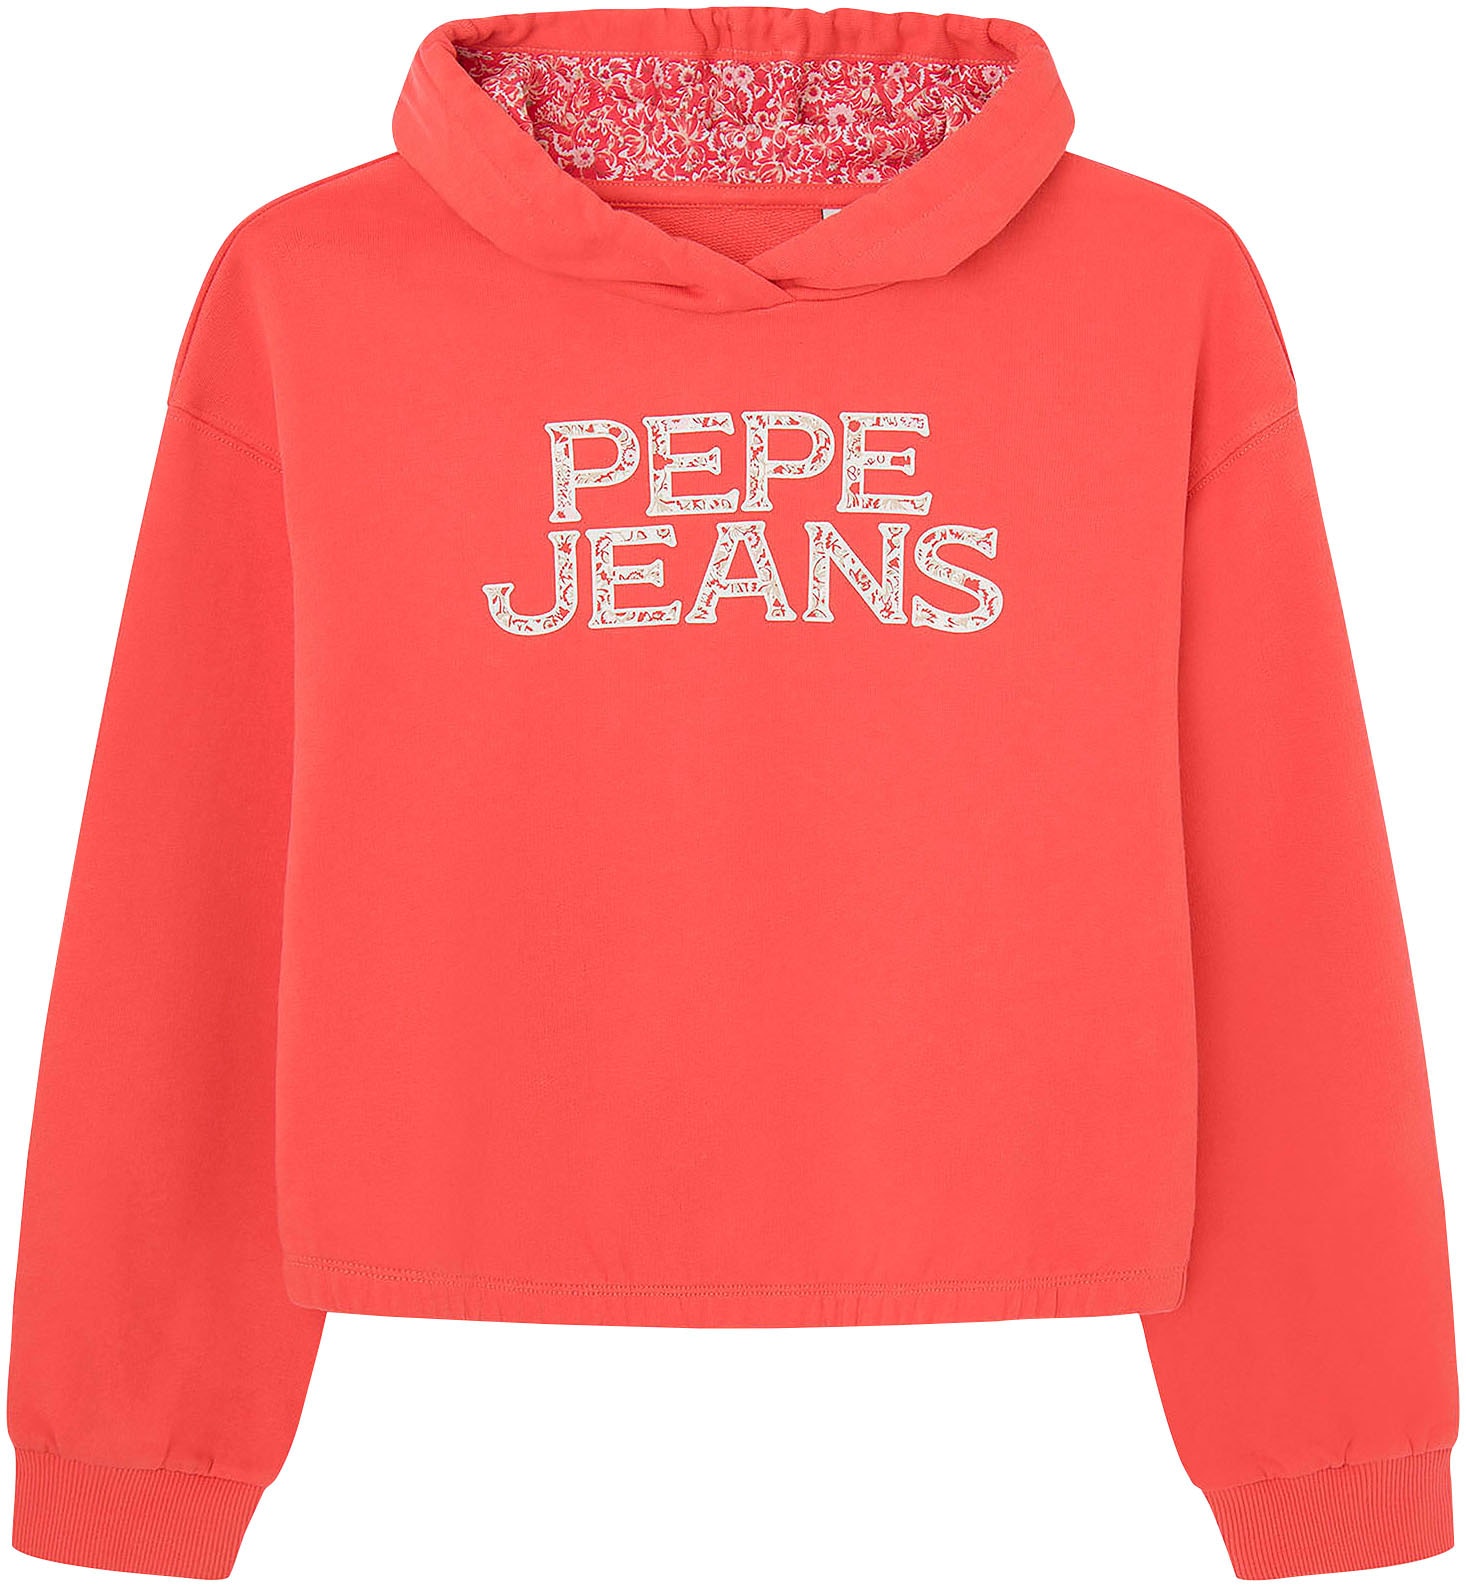 Pepe Jeans online entdecken bei OTTO